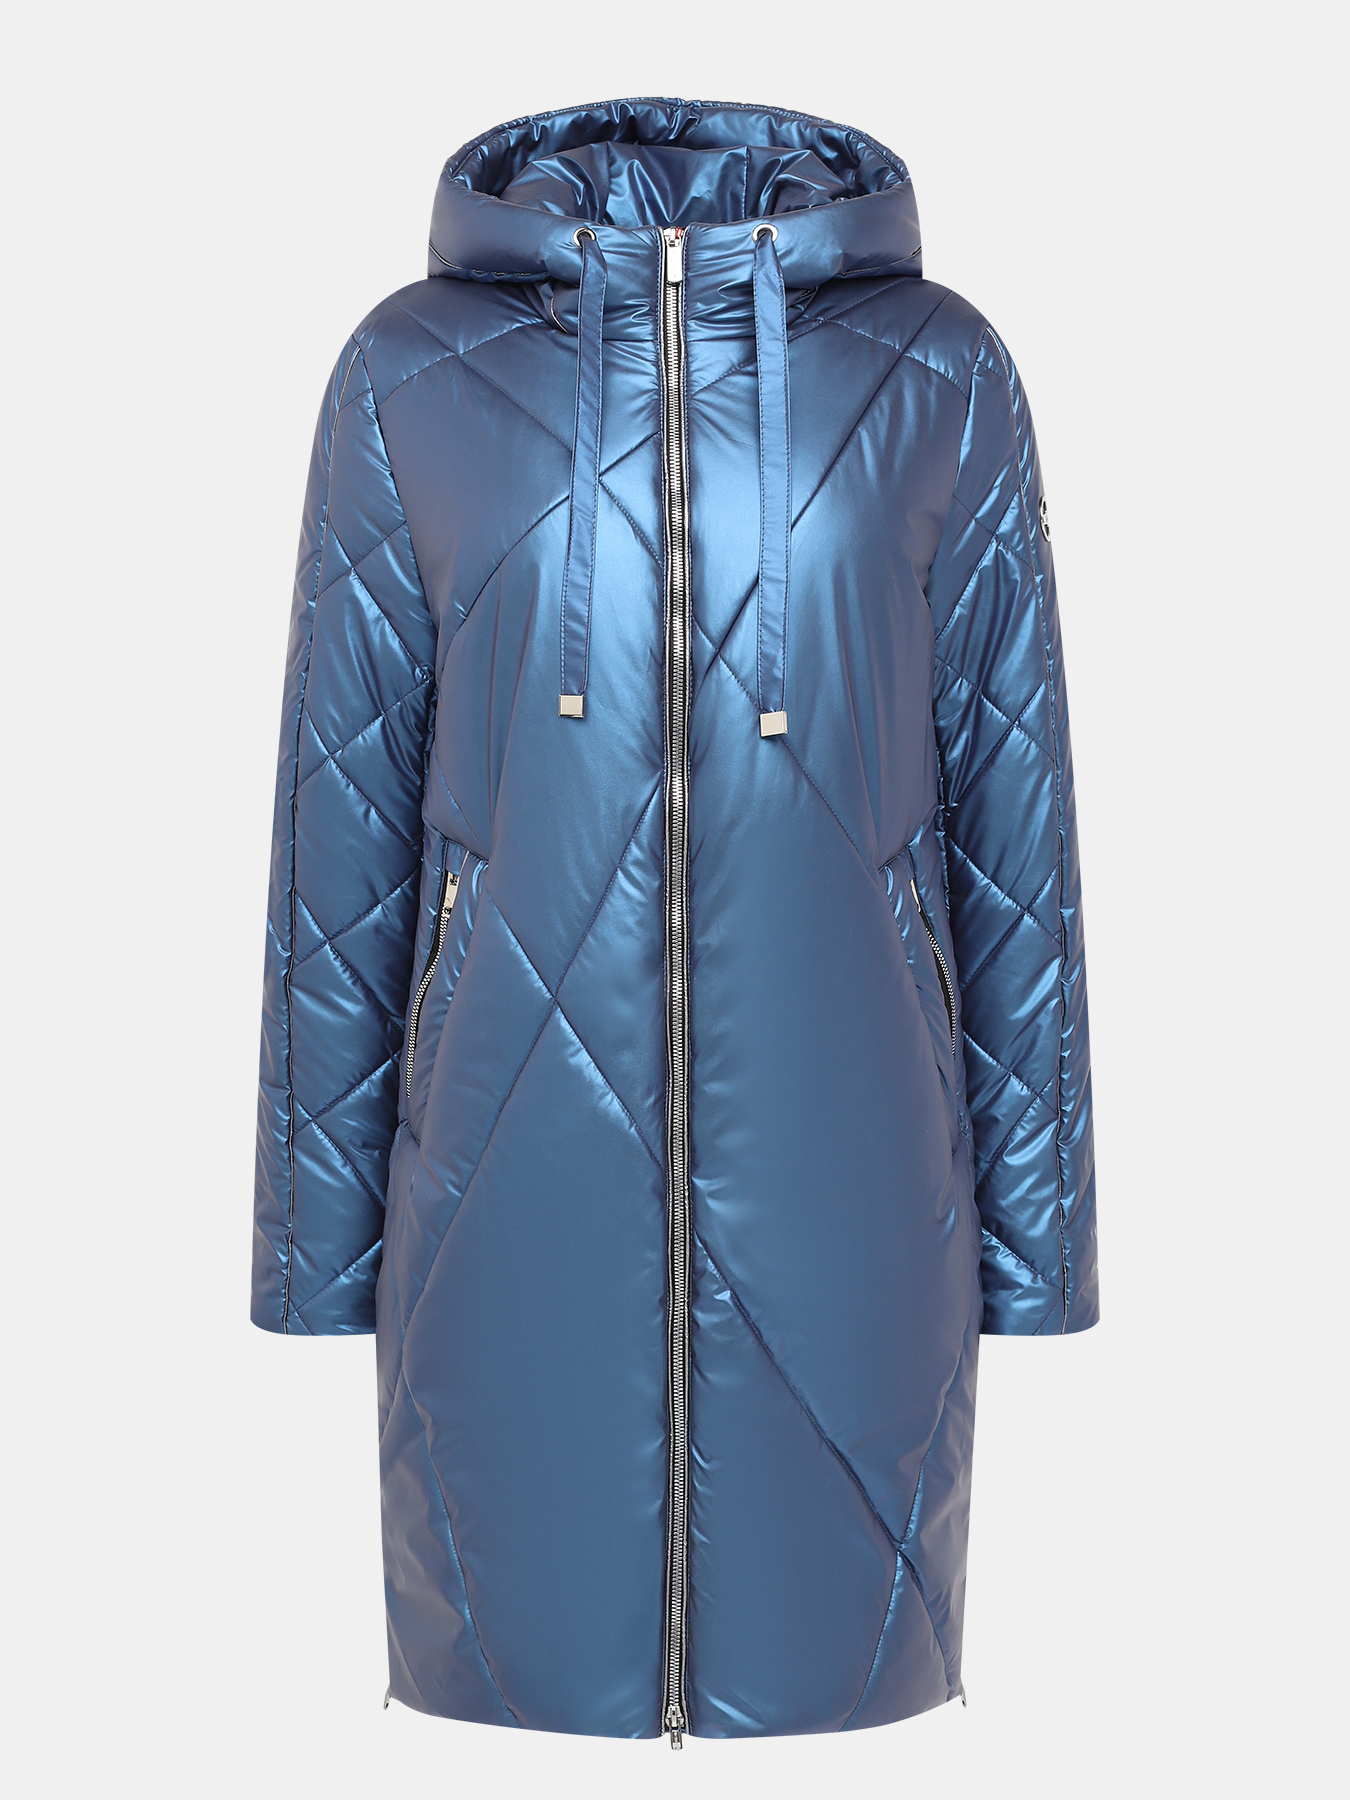 Пальто зимнее Maritta 433572-023, цвет синий, размер 50 - фото 1